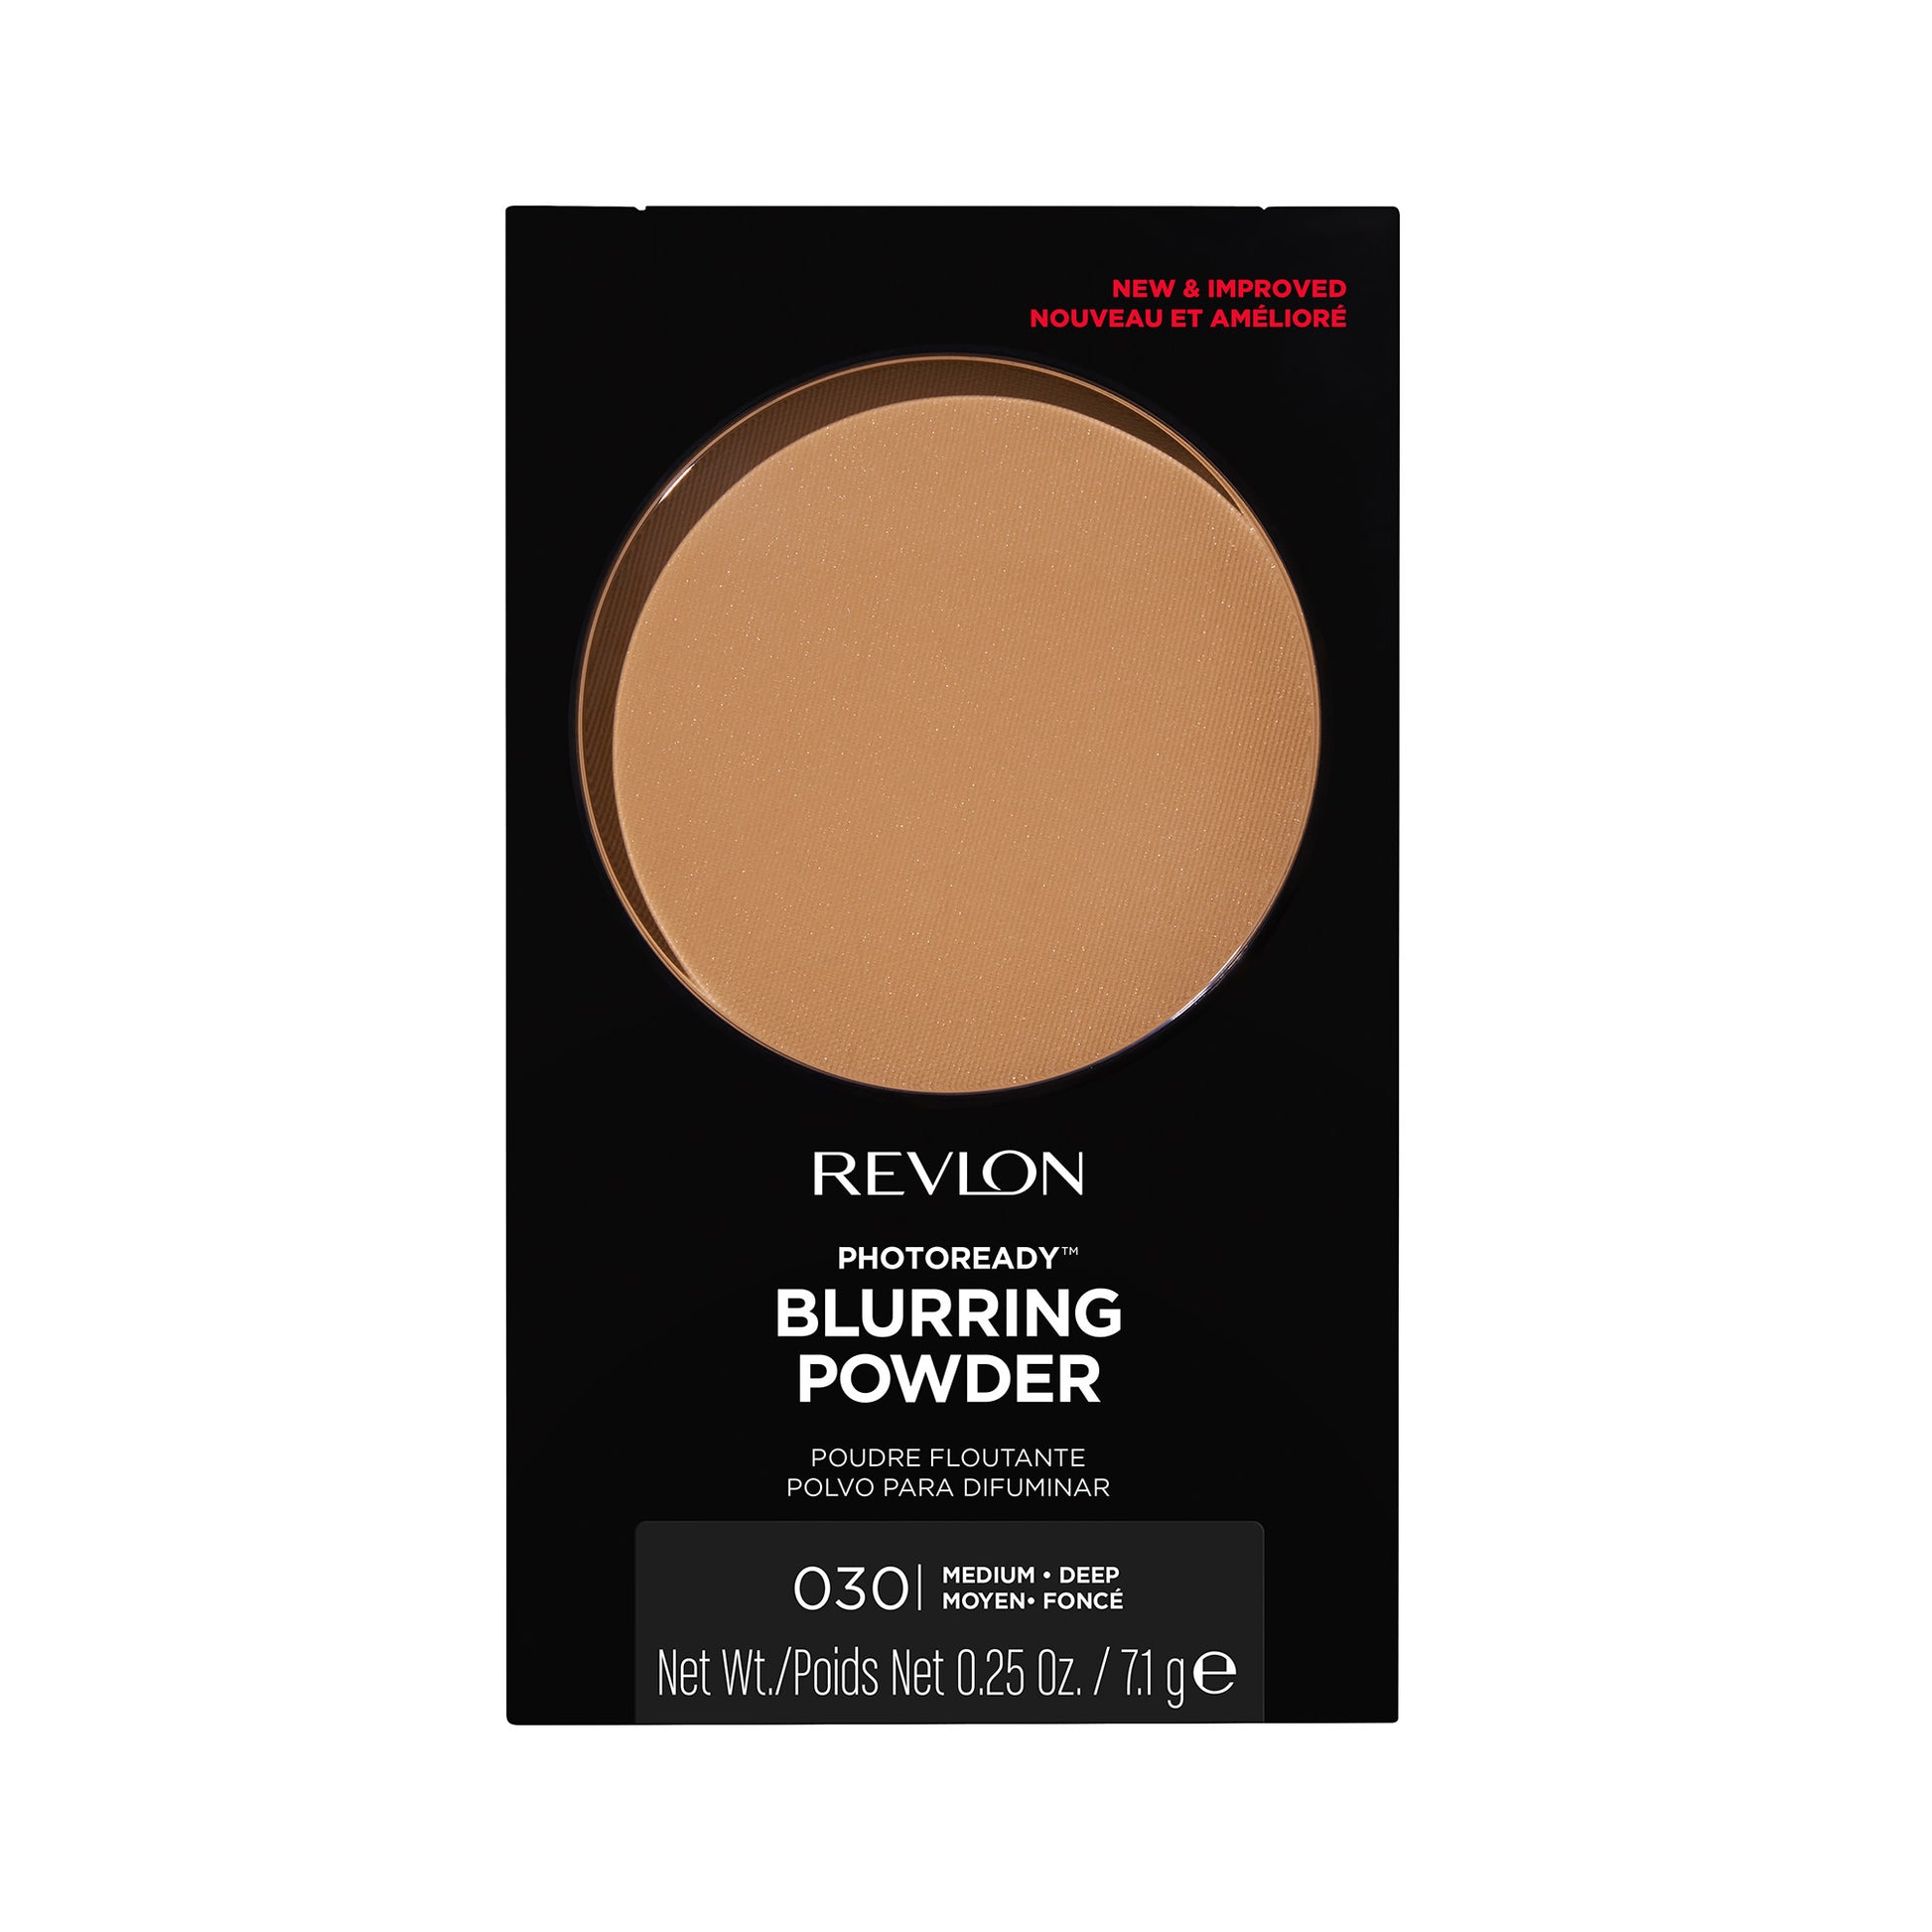 Revlon PhotoReady Powder, SPF 14, 0.25 oz. 030 Medium/Deep